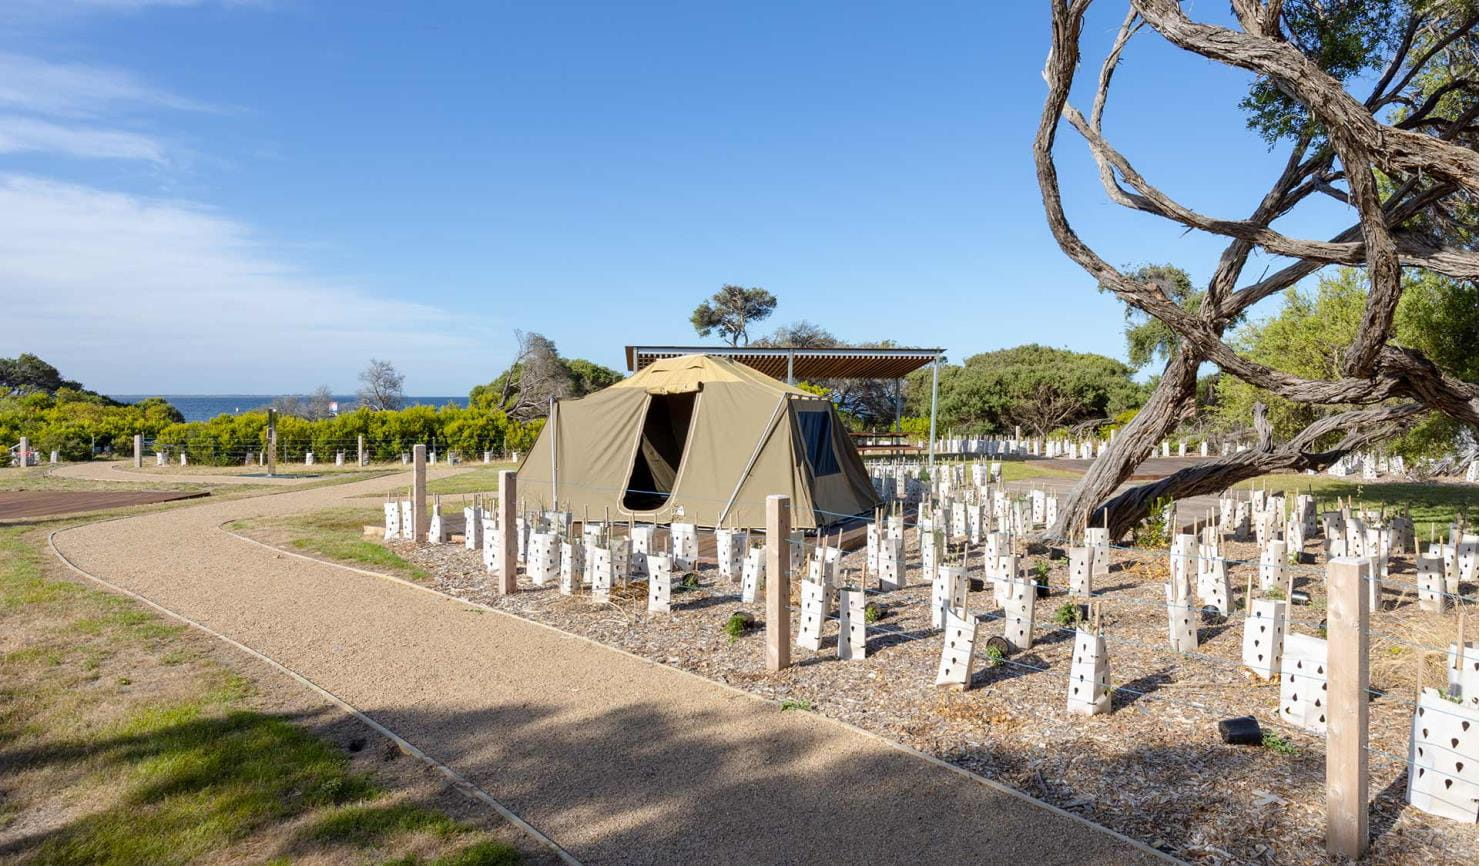 A tent set up on grass in a coastal landscape